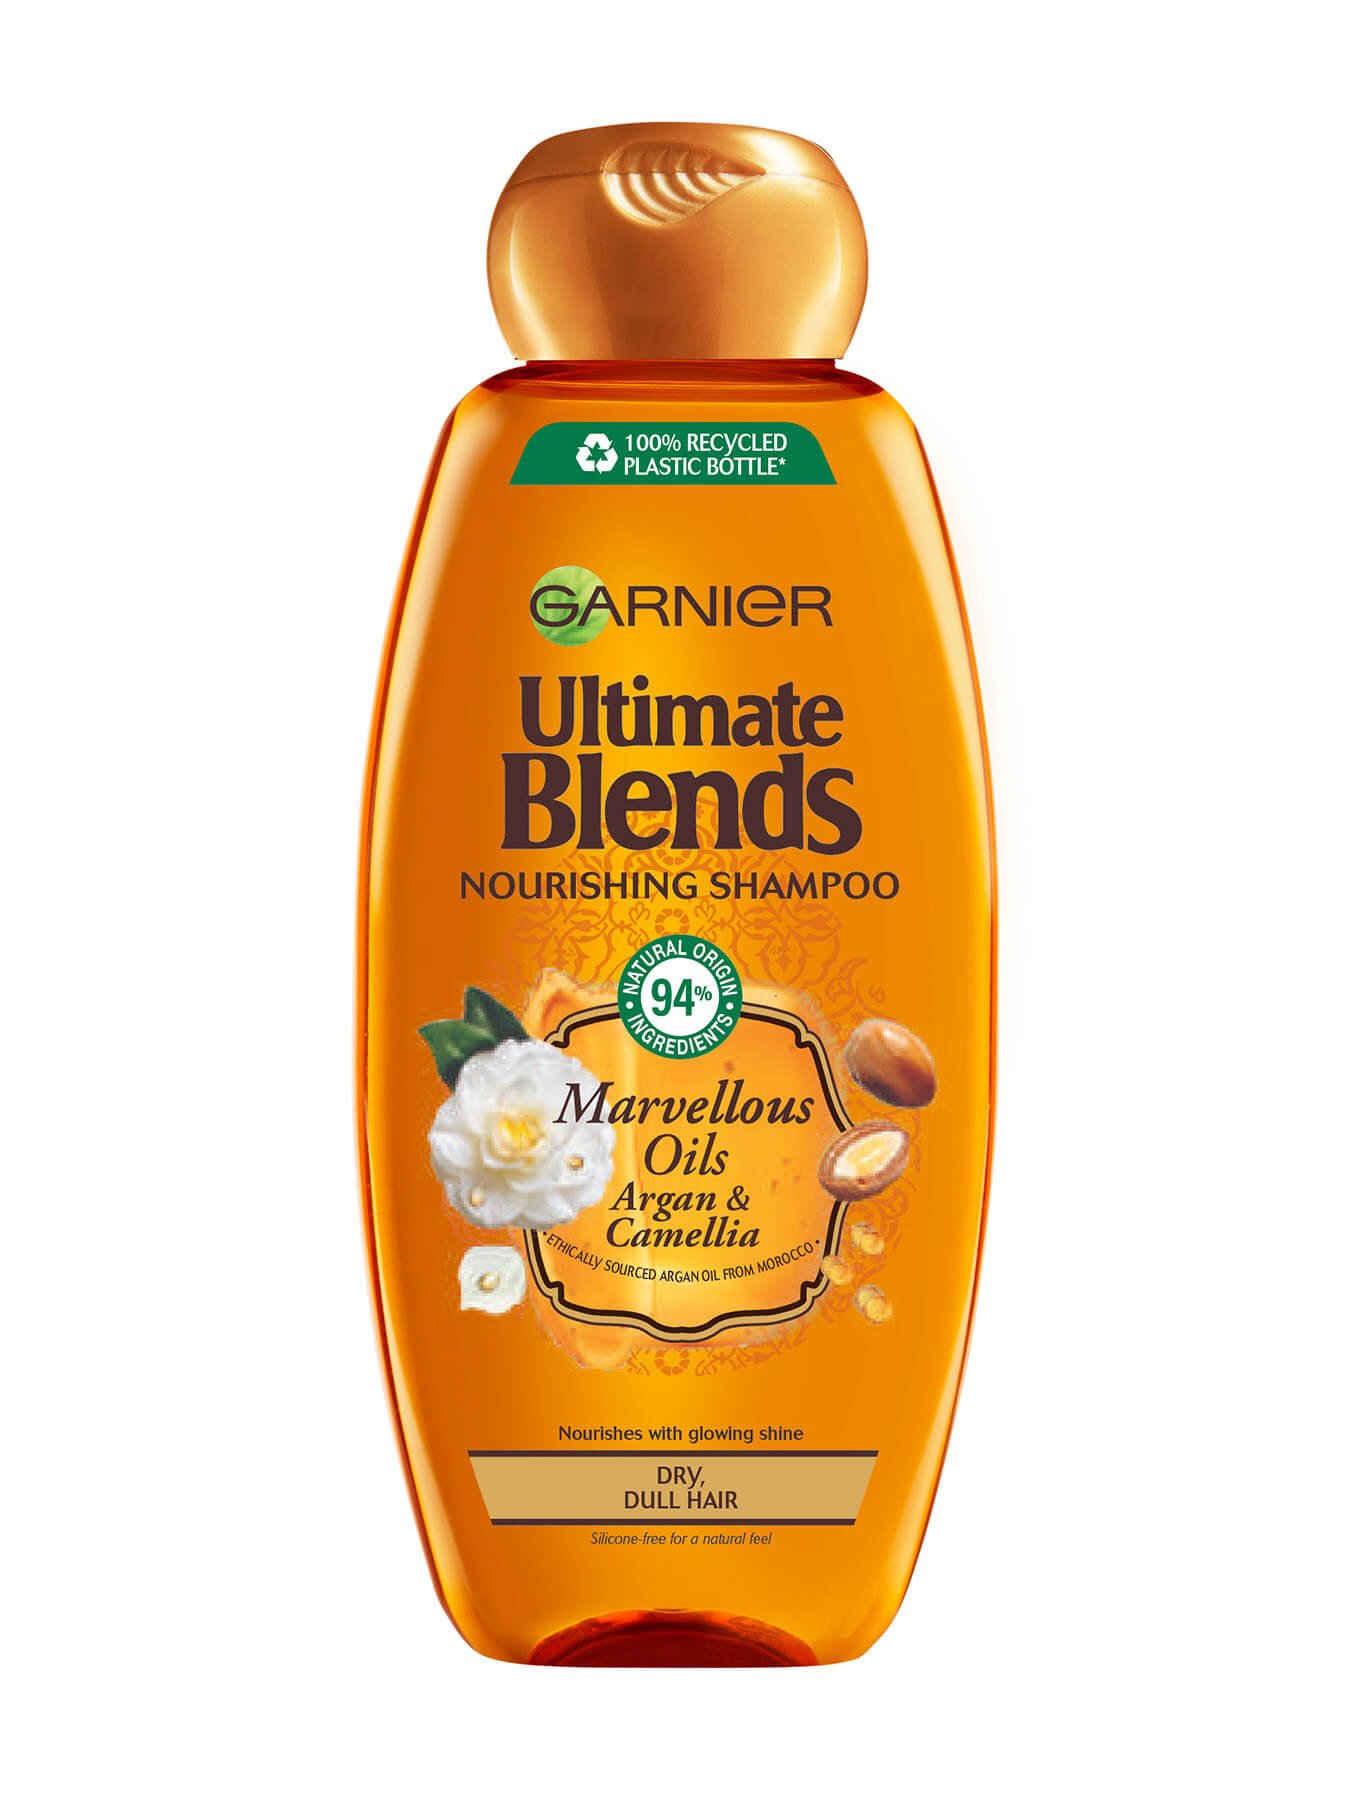 Ultimate Blends Marvellous Oils Argan & Camellia Shampoo front of pack